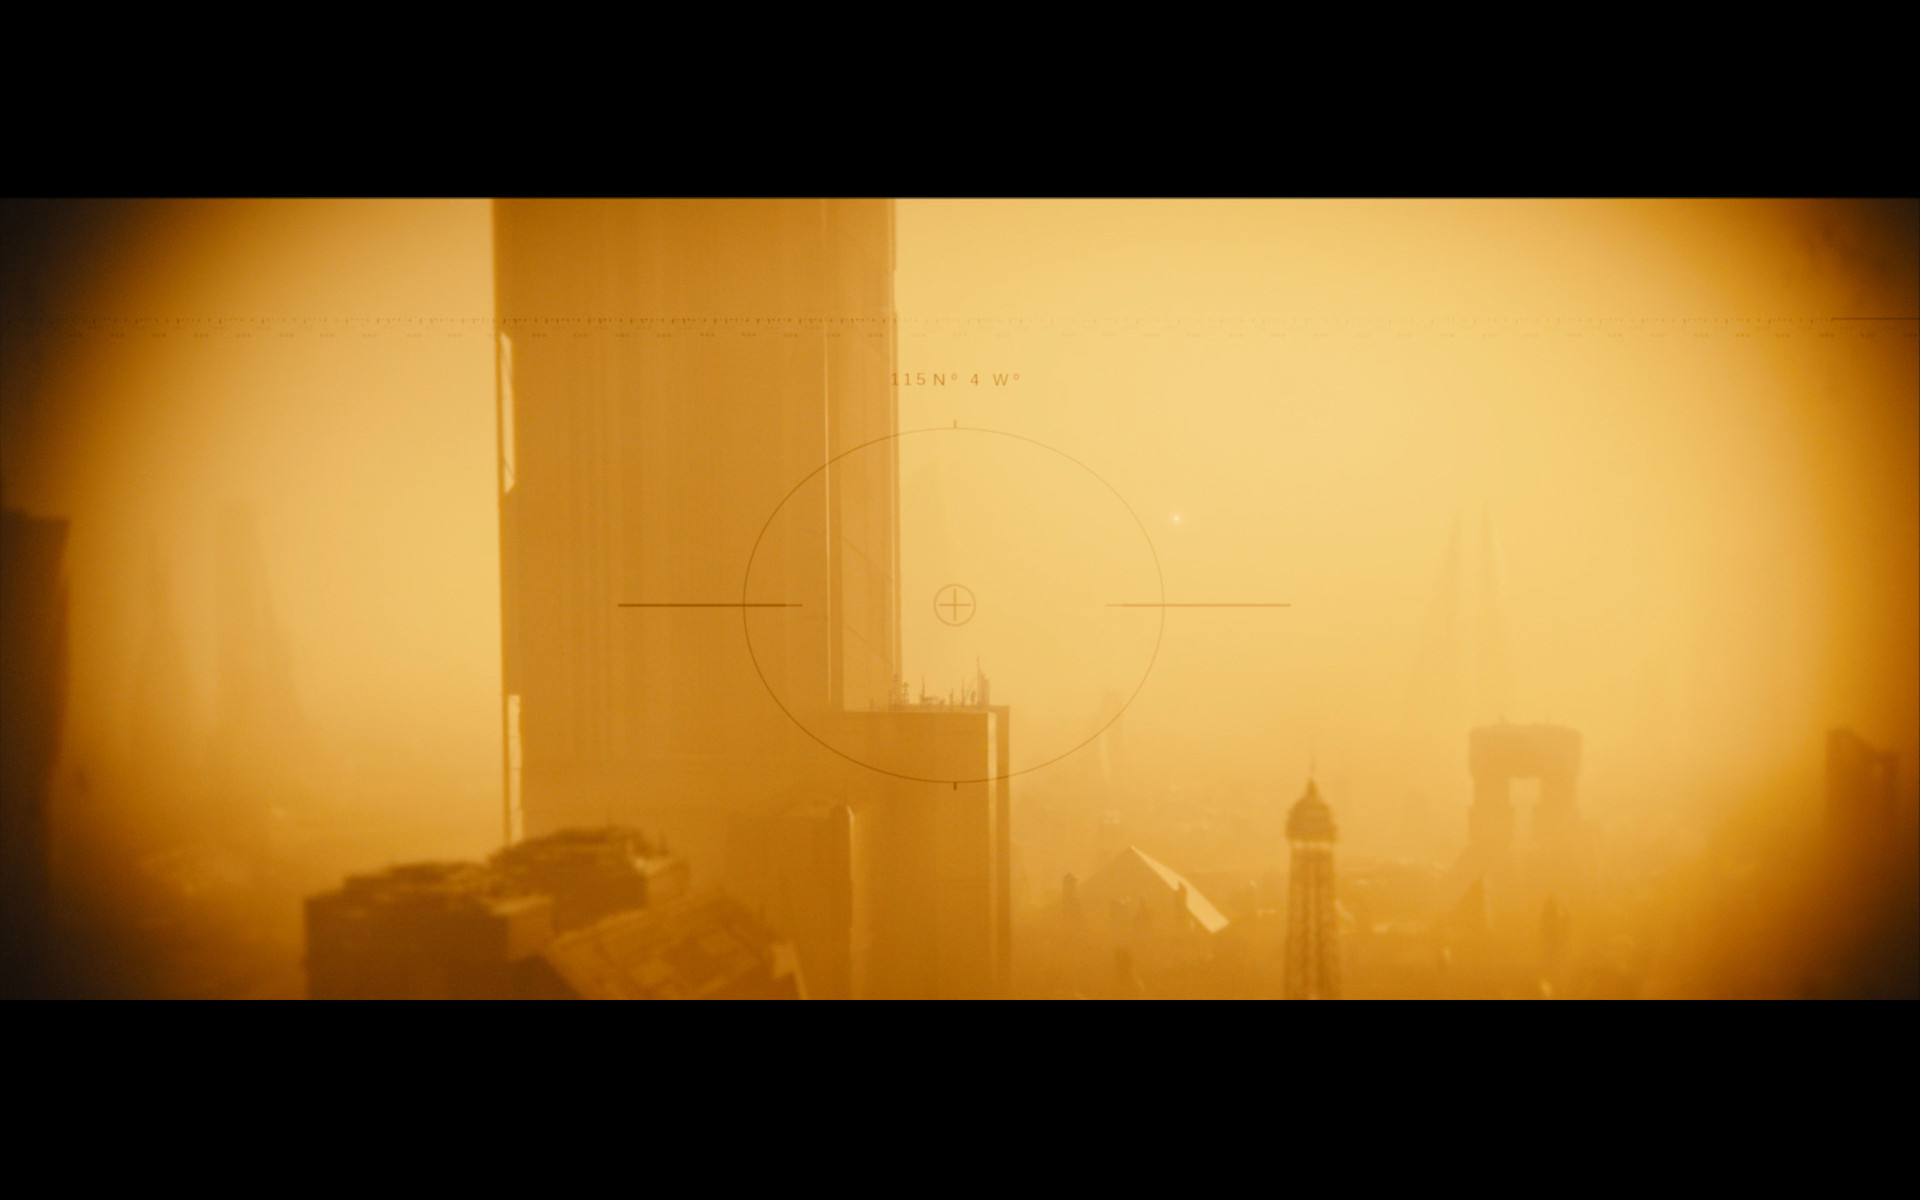 Blade Runner Zoom Background